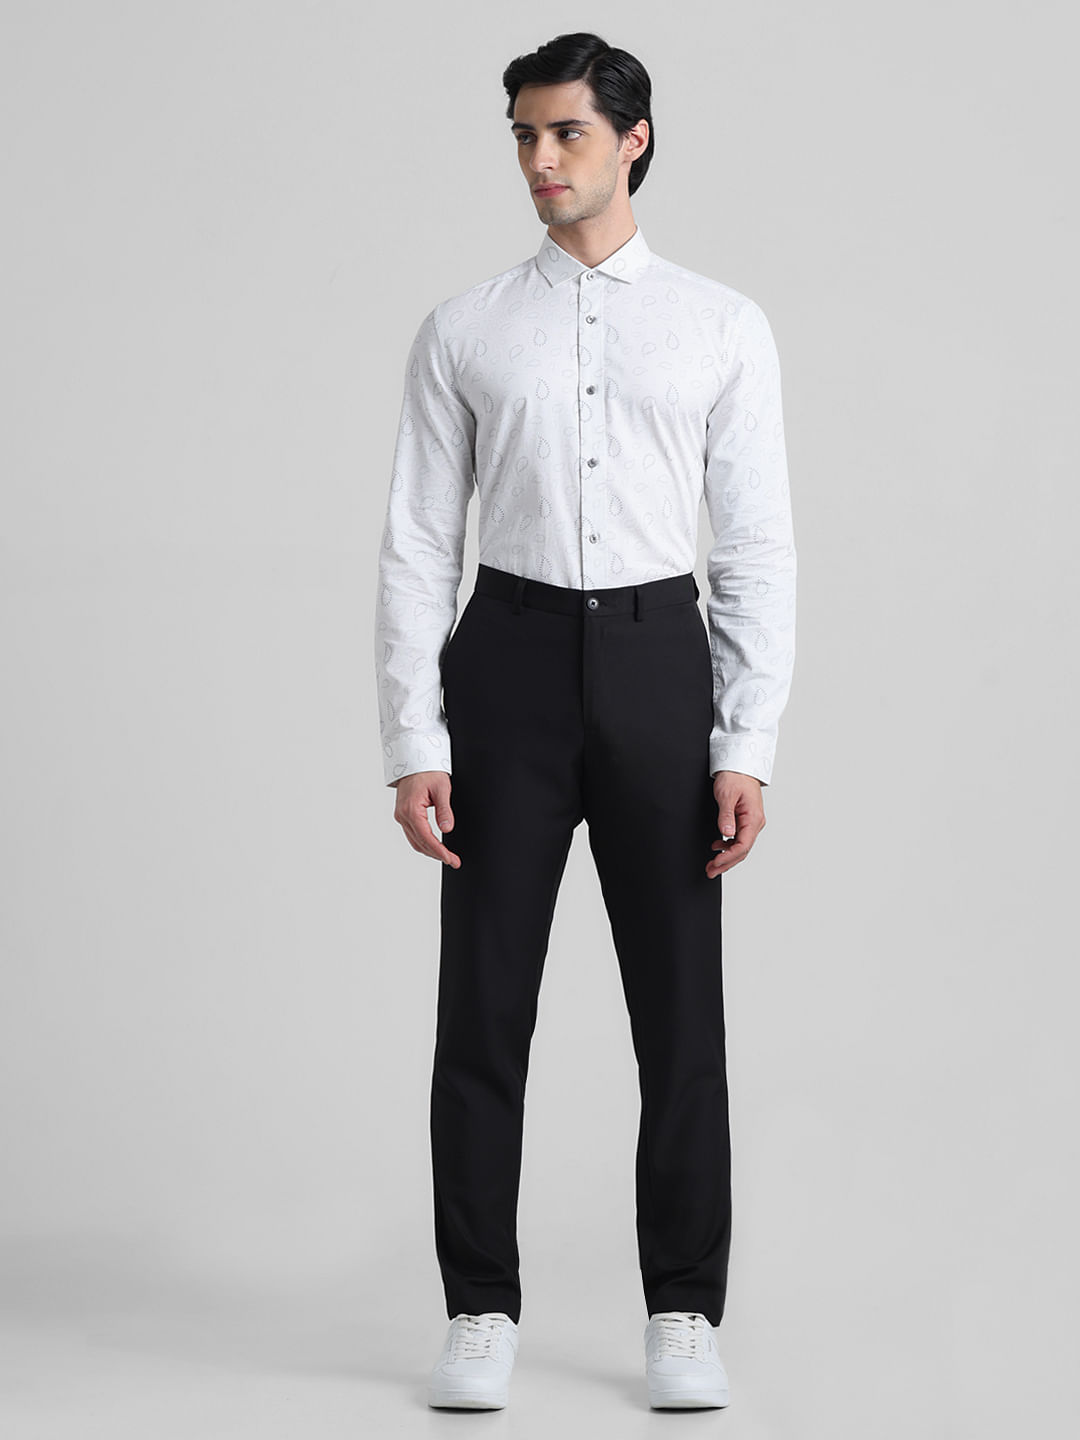 Jeans & Trousers | Cross Print formal Trouser | Freeup